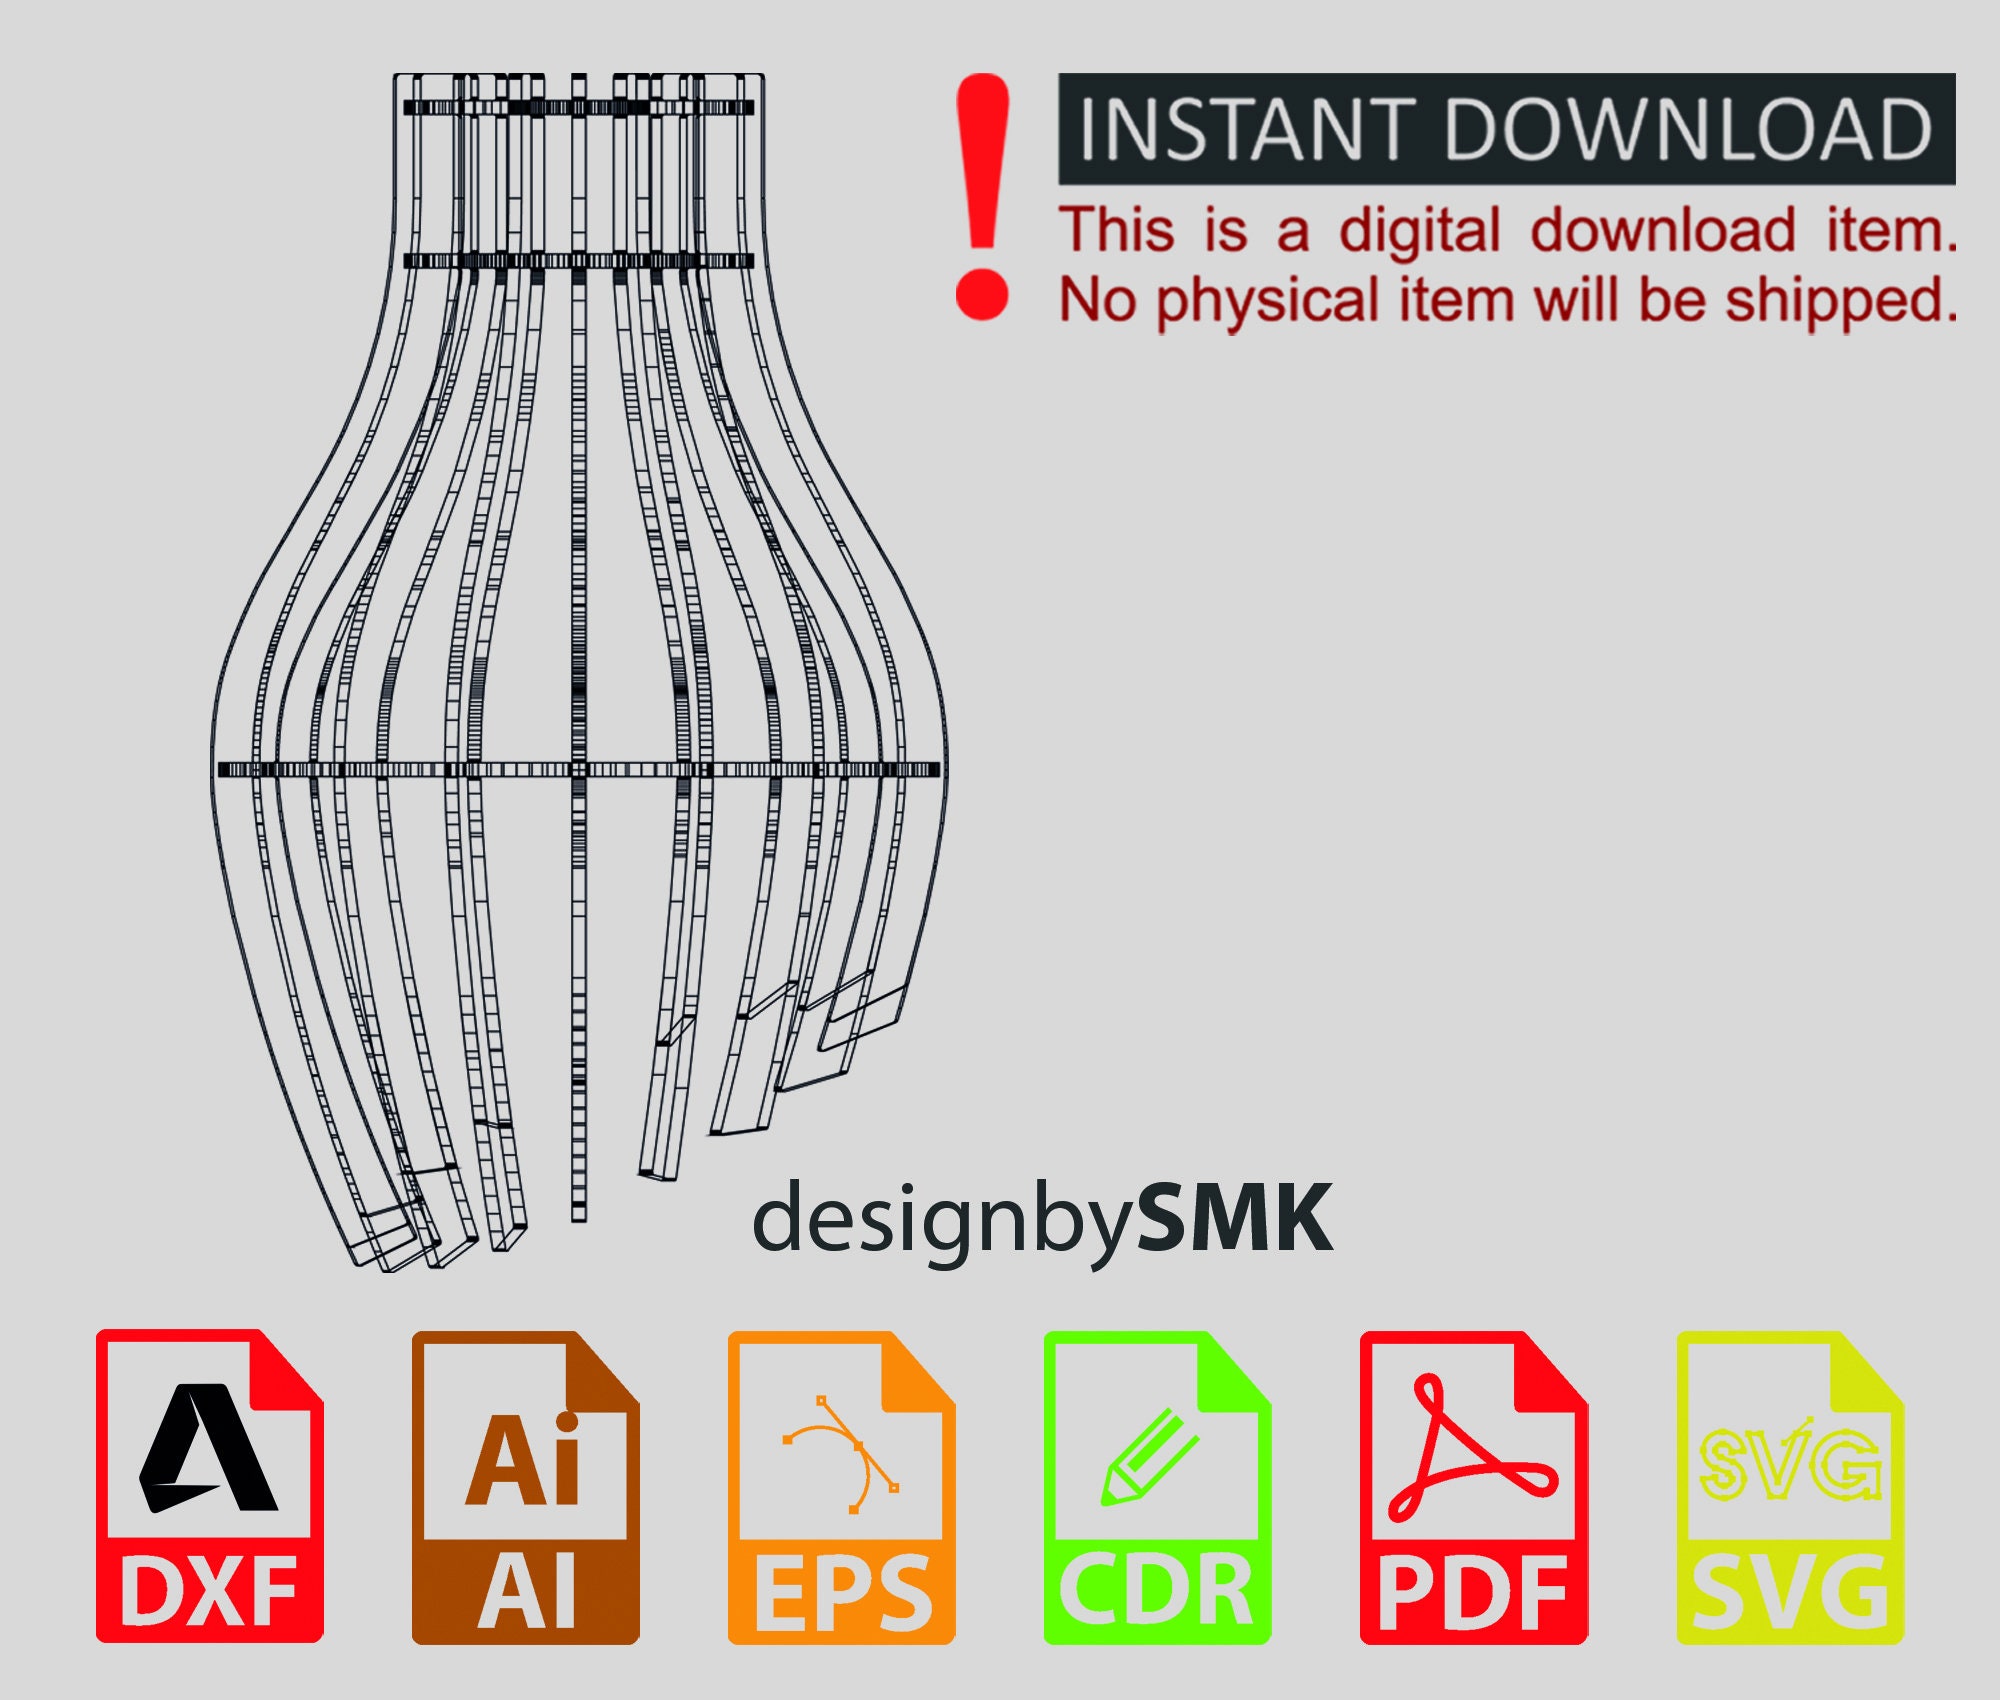 2D-60011 - Spheric wooden lamp DXF CDR plan for laser machine cut